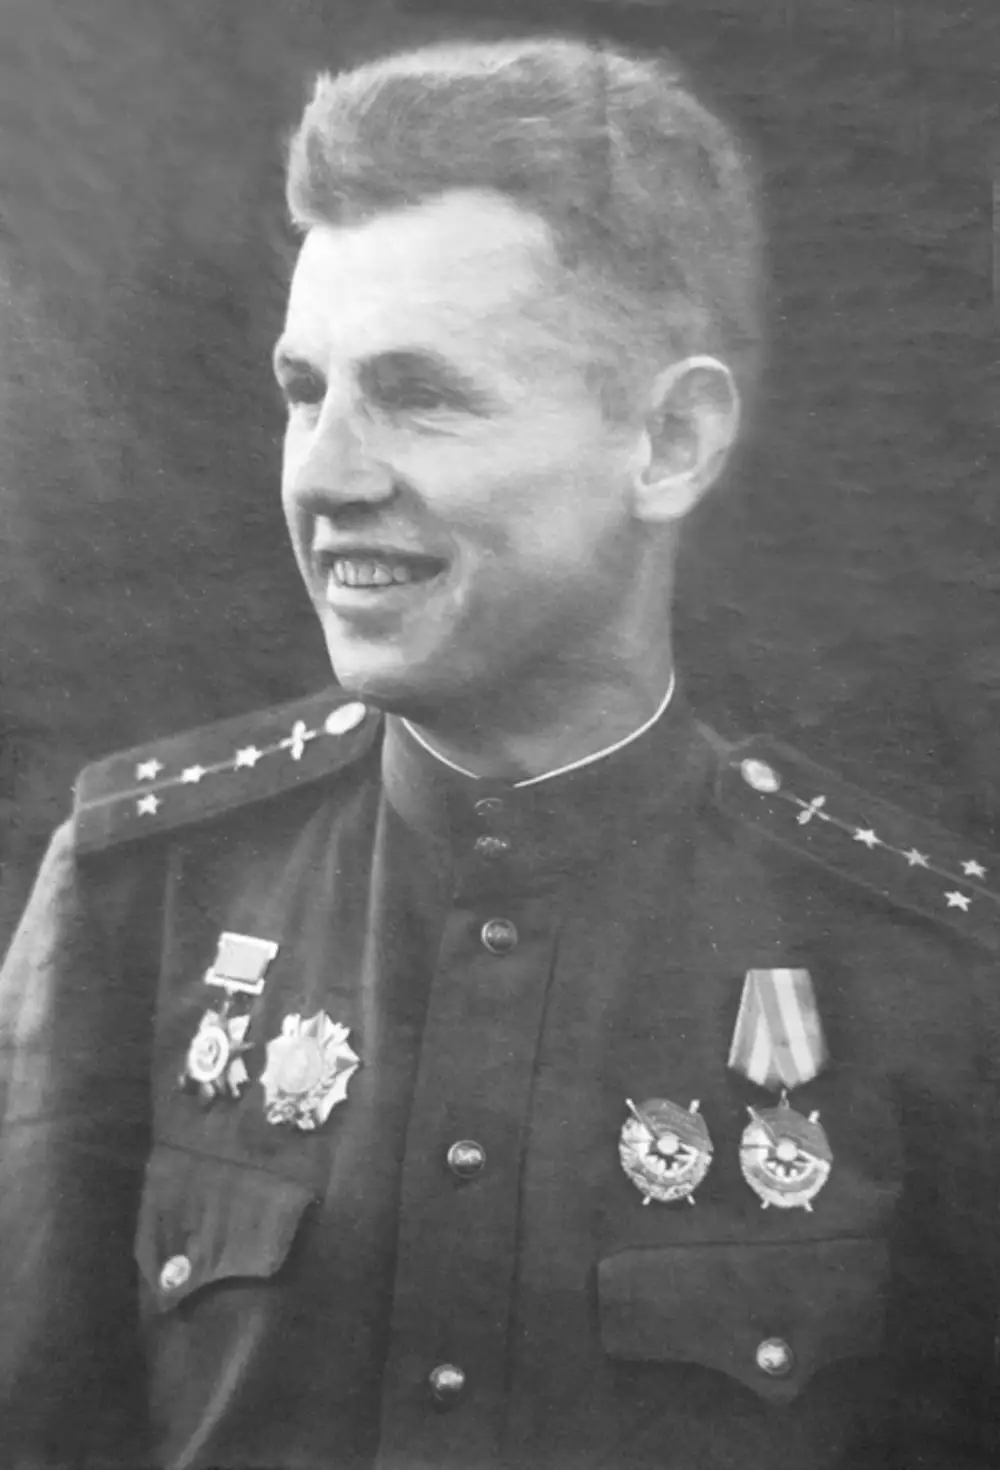 Александр Николаевич Ефимов